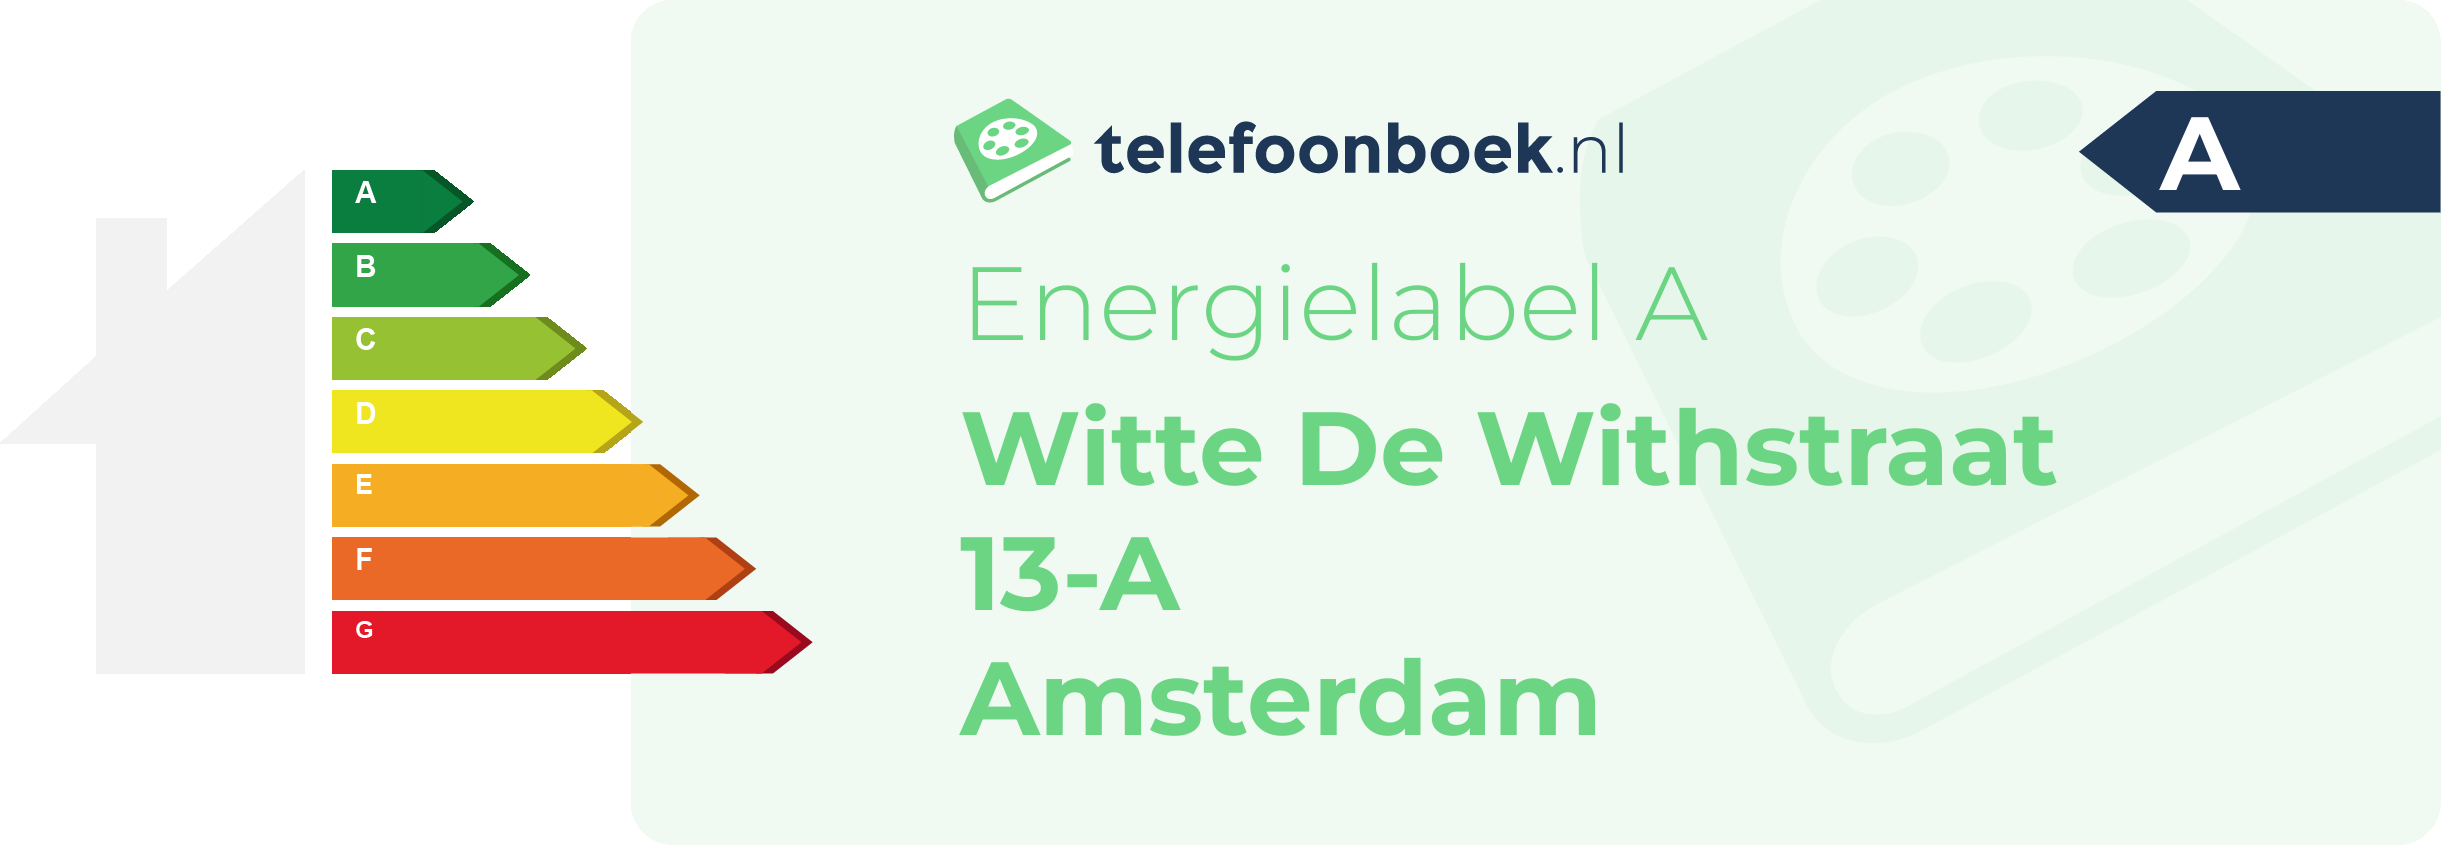 Energielabel Witte De Withstraat 13-A Amsterdam